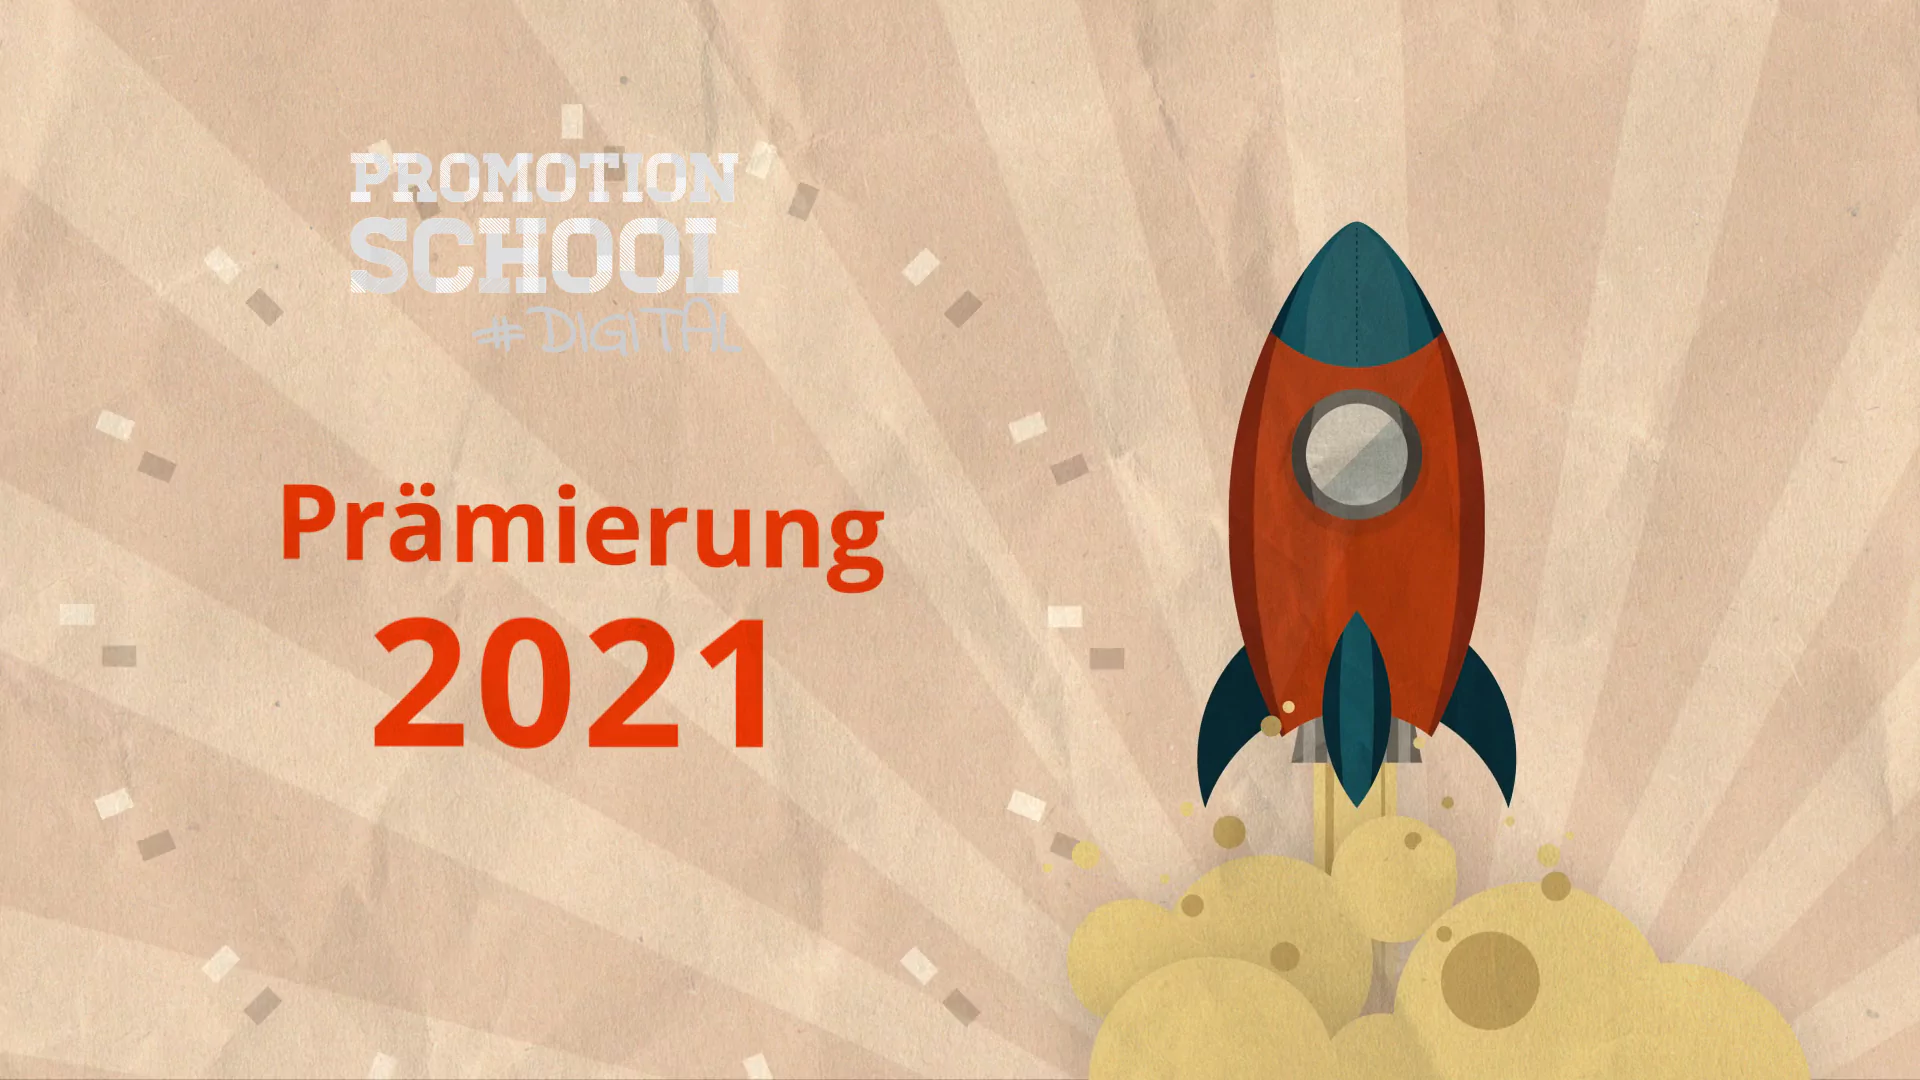 Best Company Video Gmbh Wolfsburg Ag Promotion School Digital 2021 Praemierung